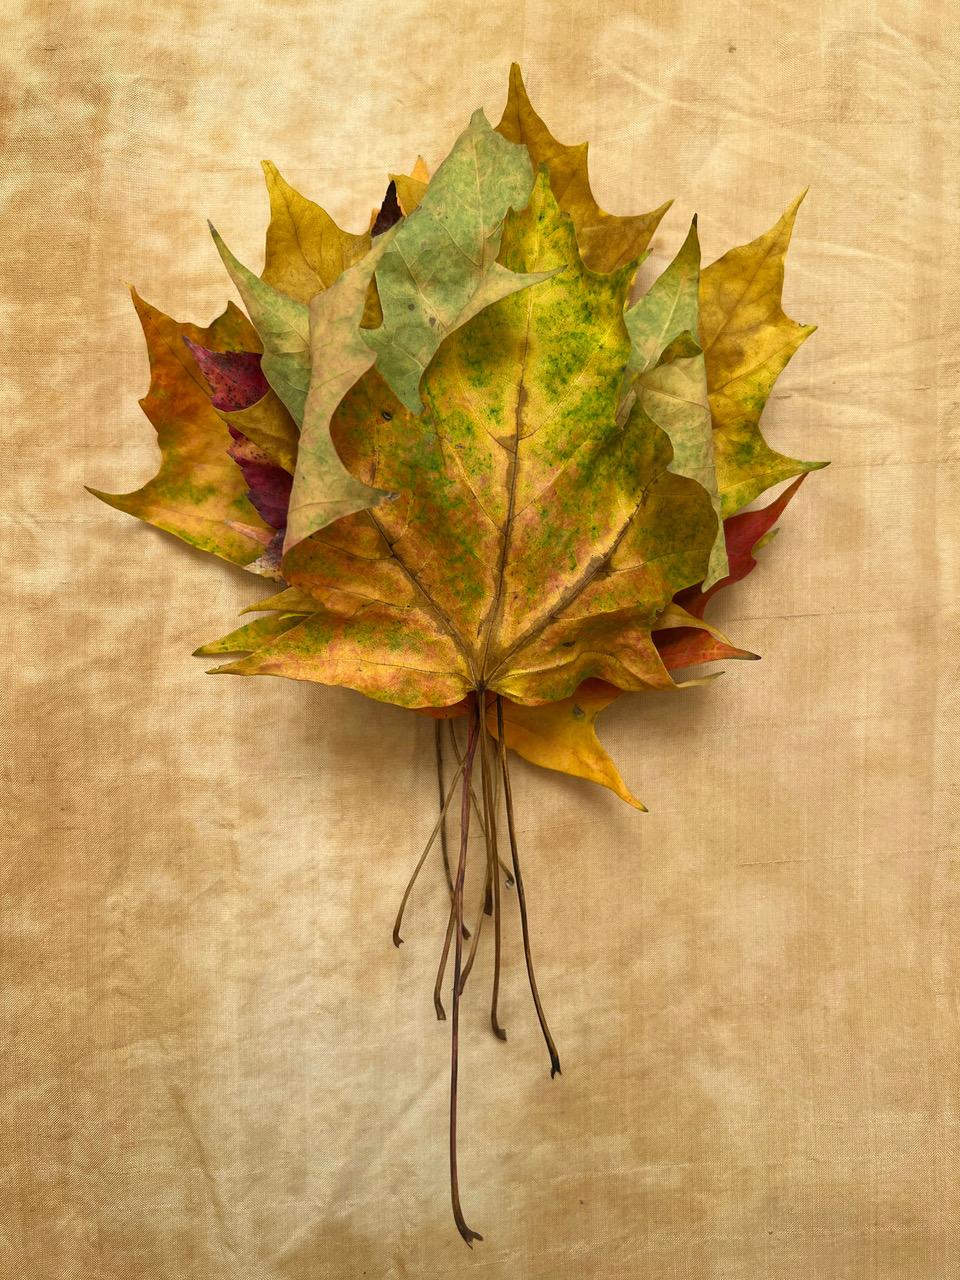 Paul Cava Still-Life Photograph - Untitled #3484 from "Leaves" series: nature still-life leaf photograph w/ green